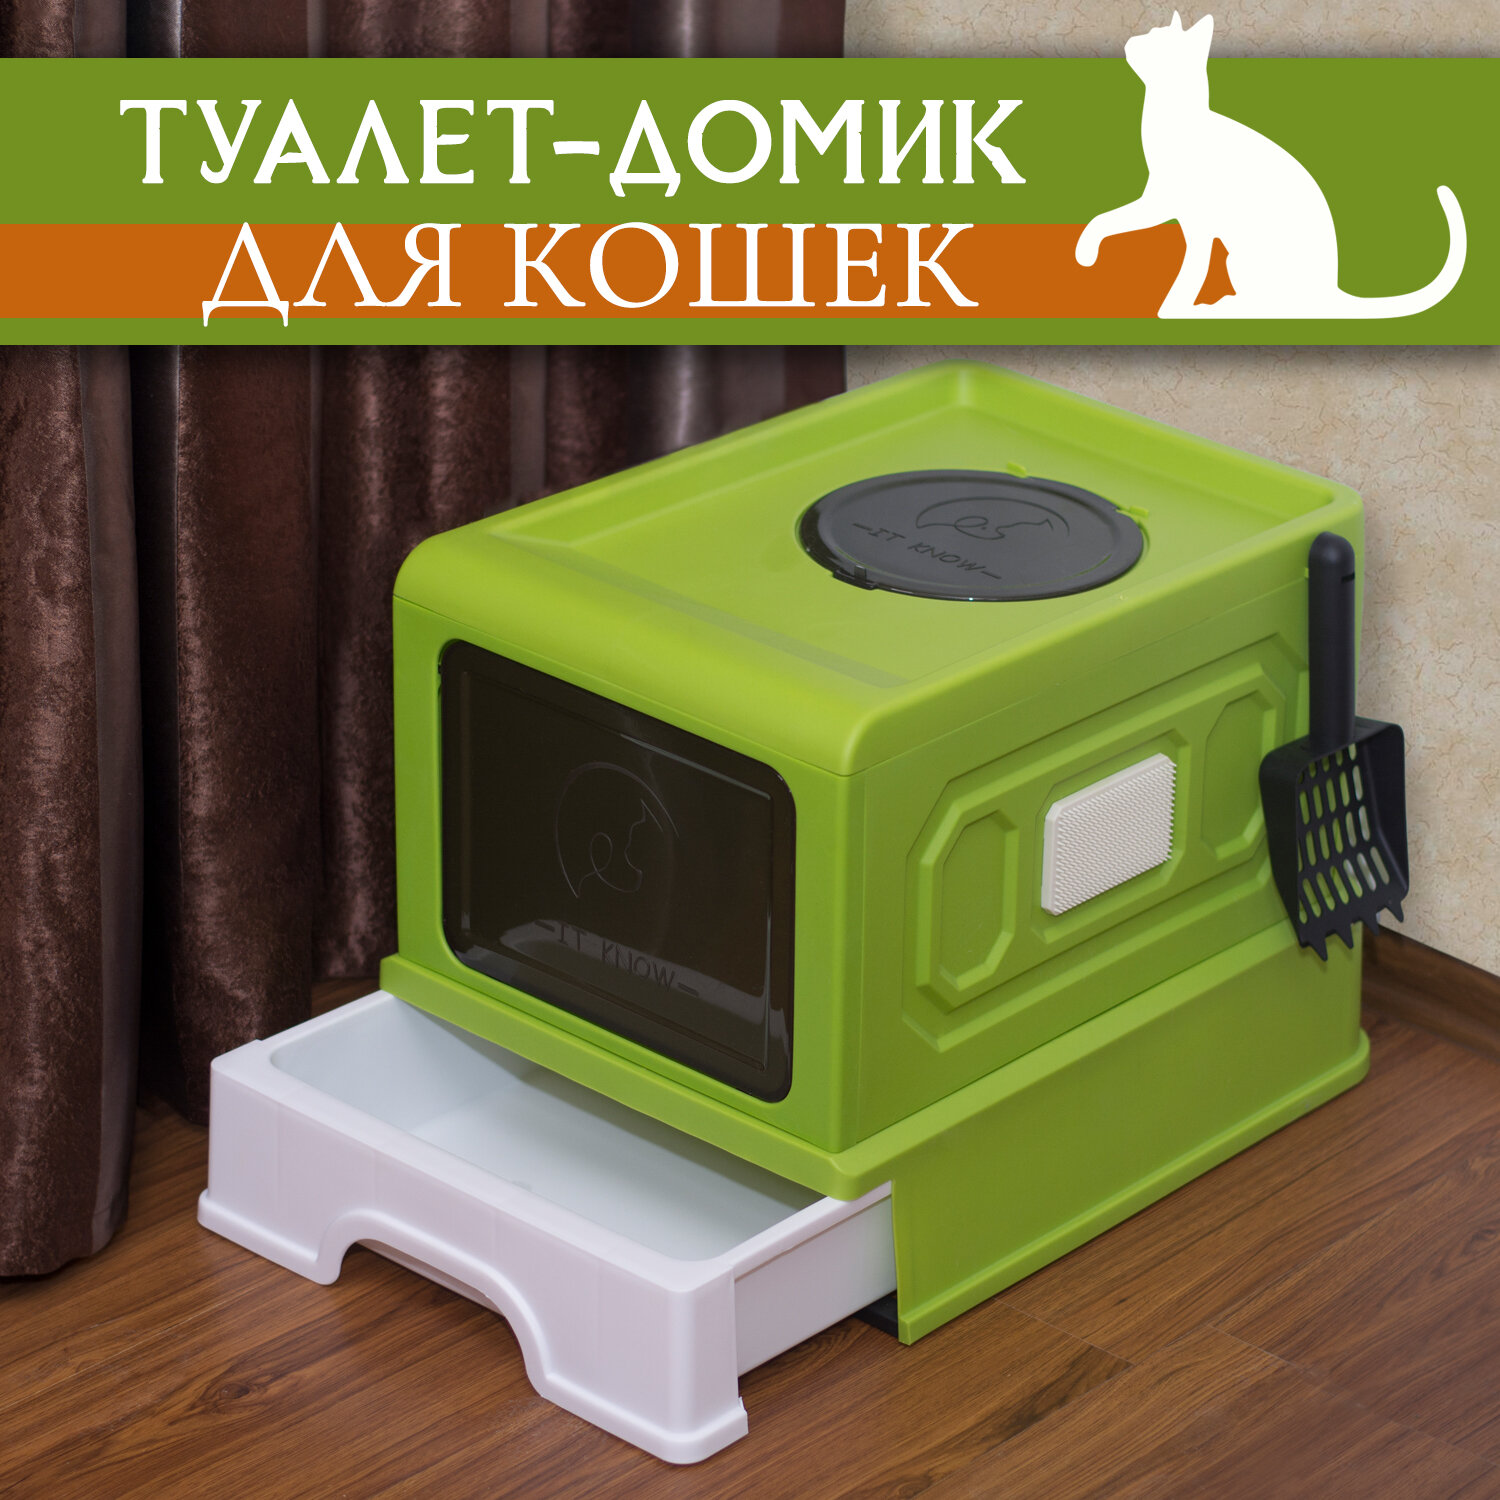 Туалет закрытого типа (био) для кошек (лайм), Priopetko. Серия "Малибу"